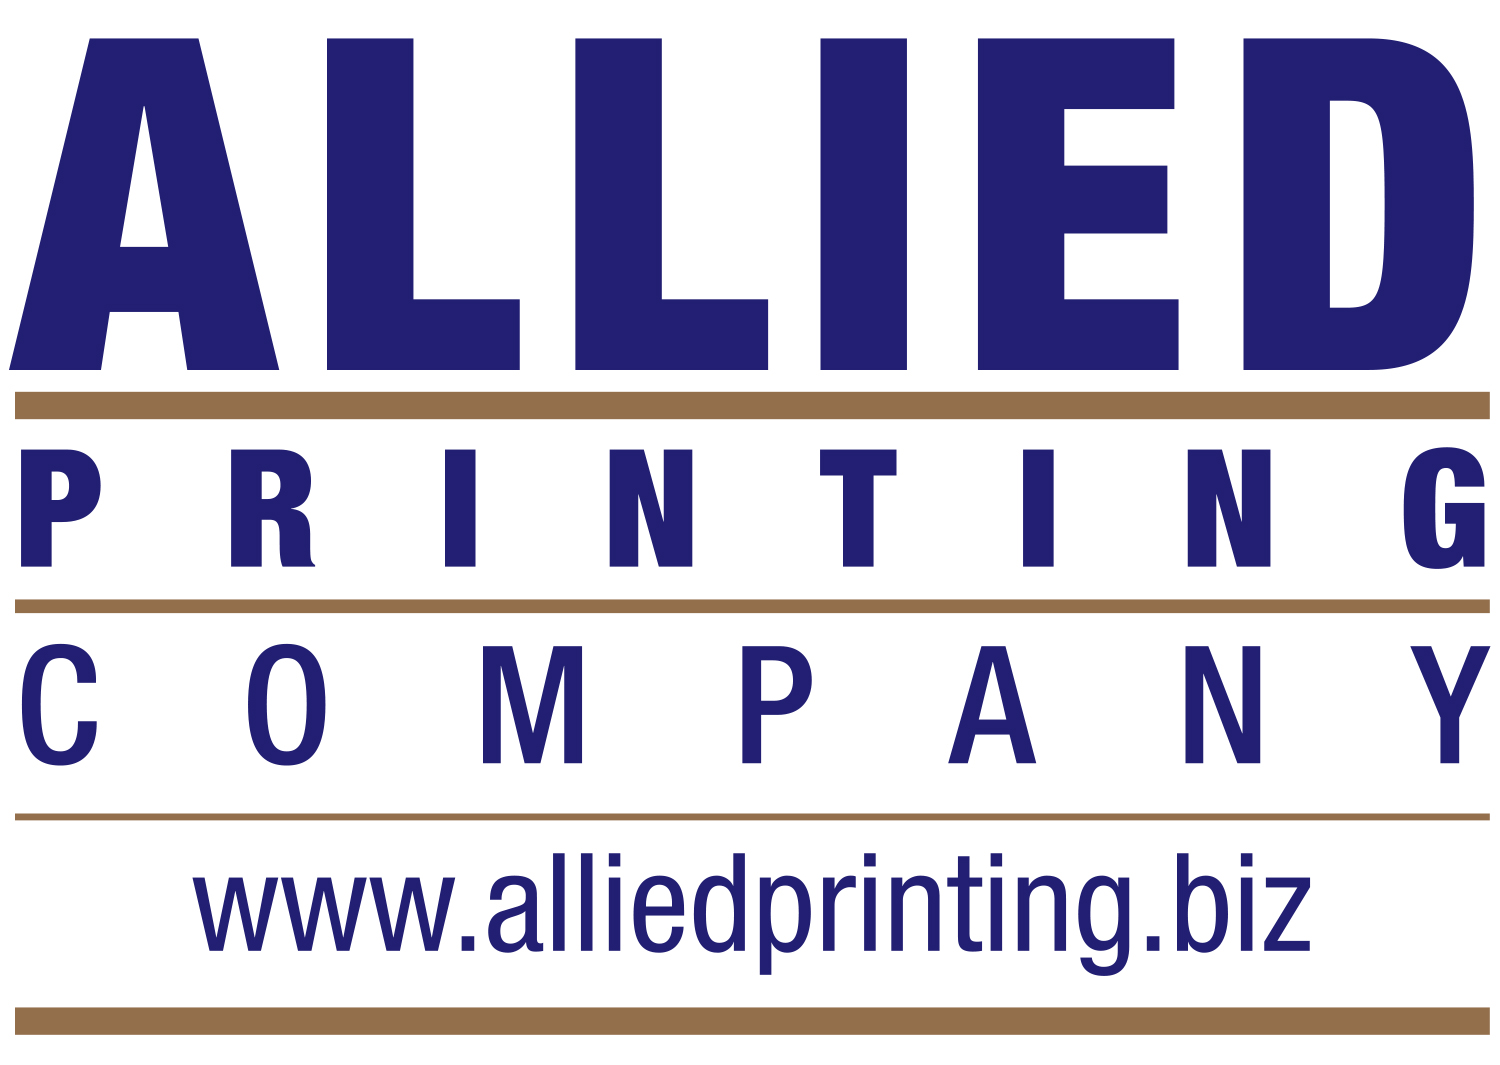 (c) Alliedprinting.biz